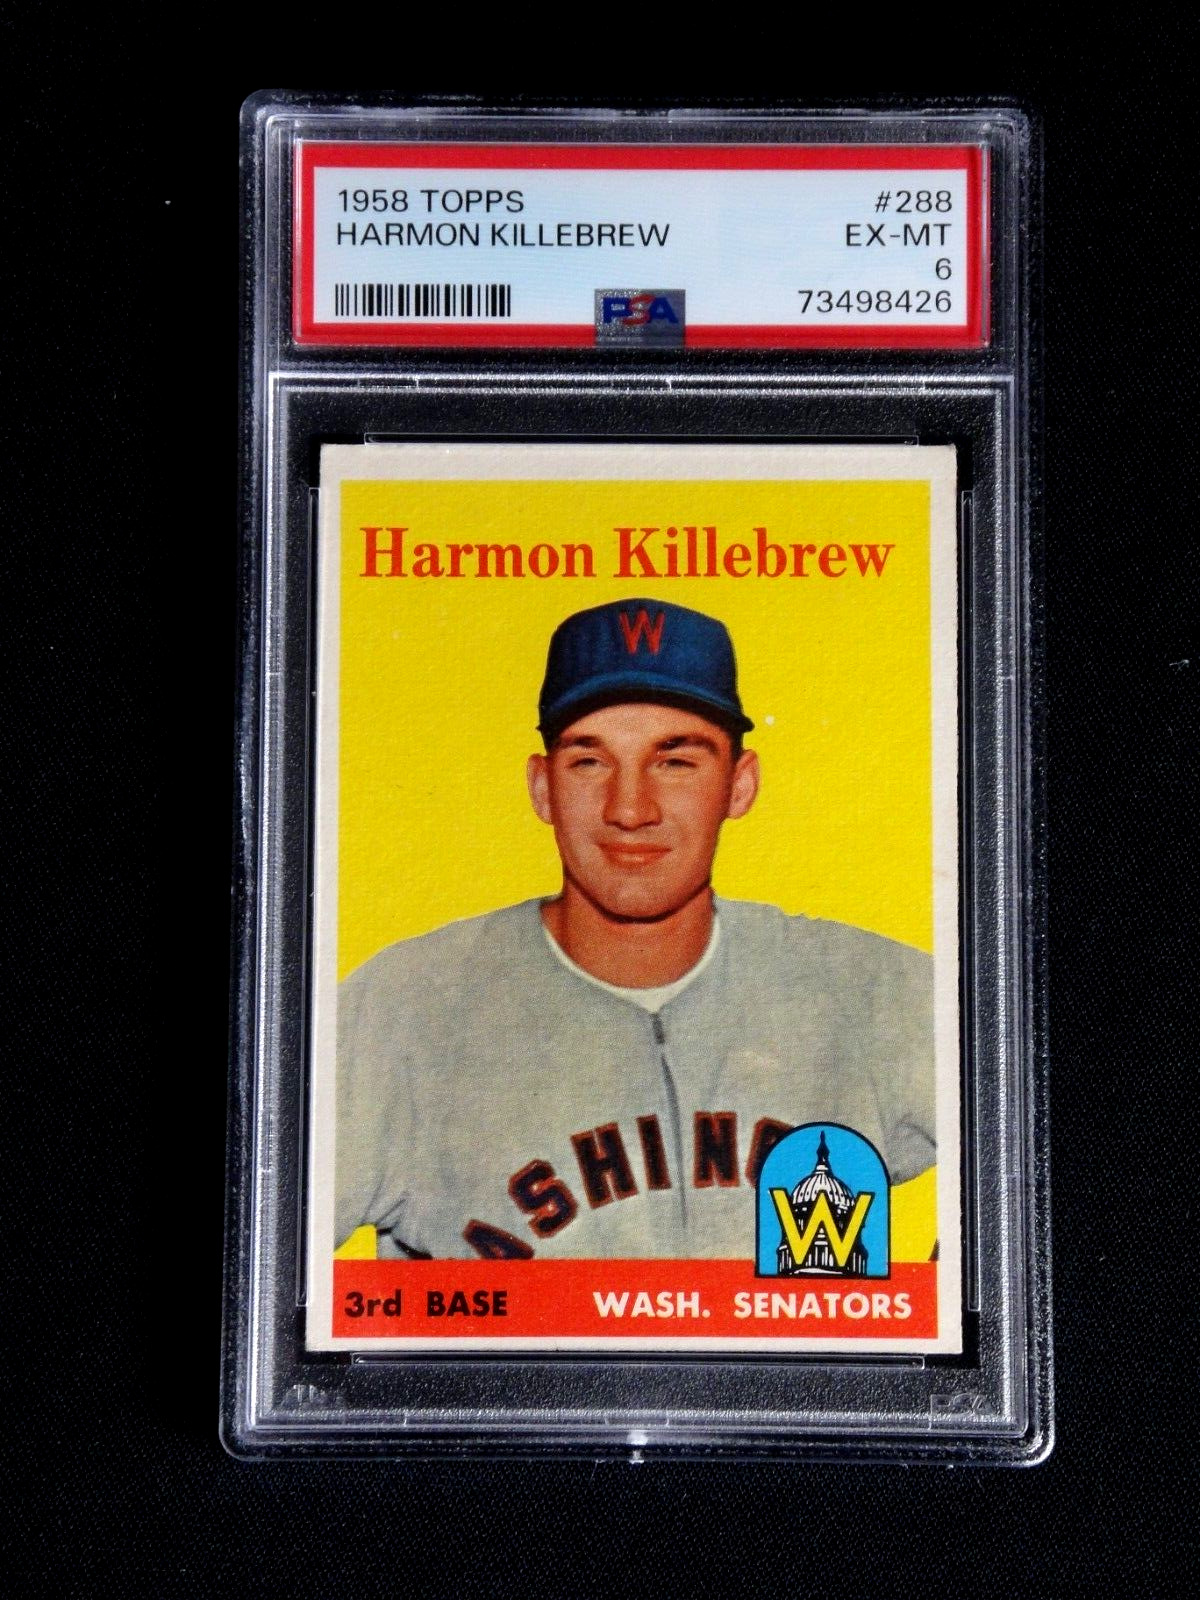 HARMON KILLEBREW 1958 TOPPS BASEBALL CARD #288 PSA 6 EXCELLENT TO NEAR MINT HOF